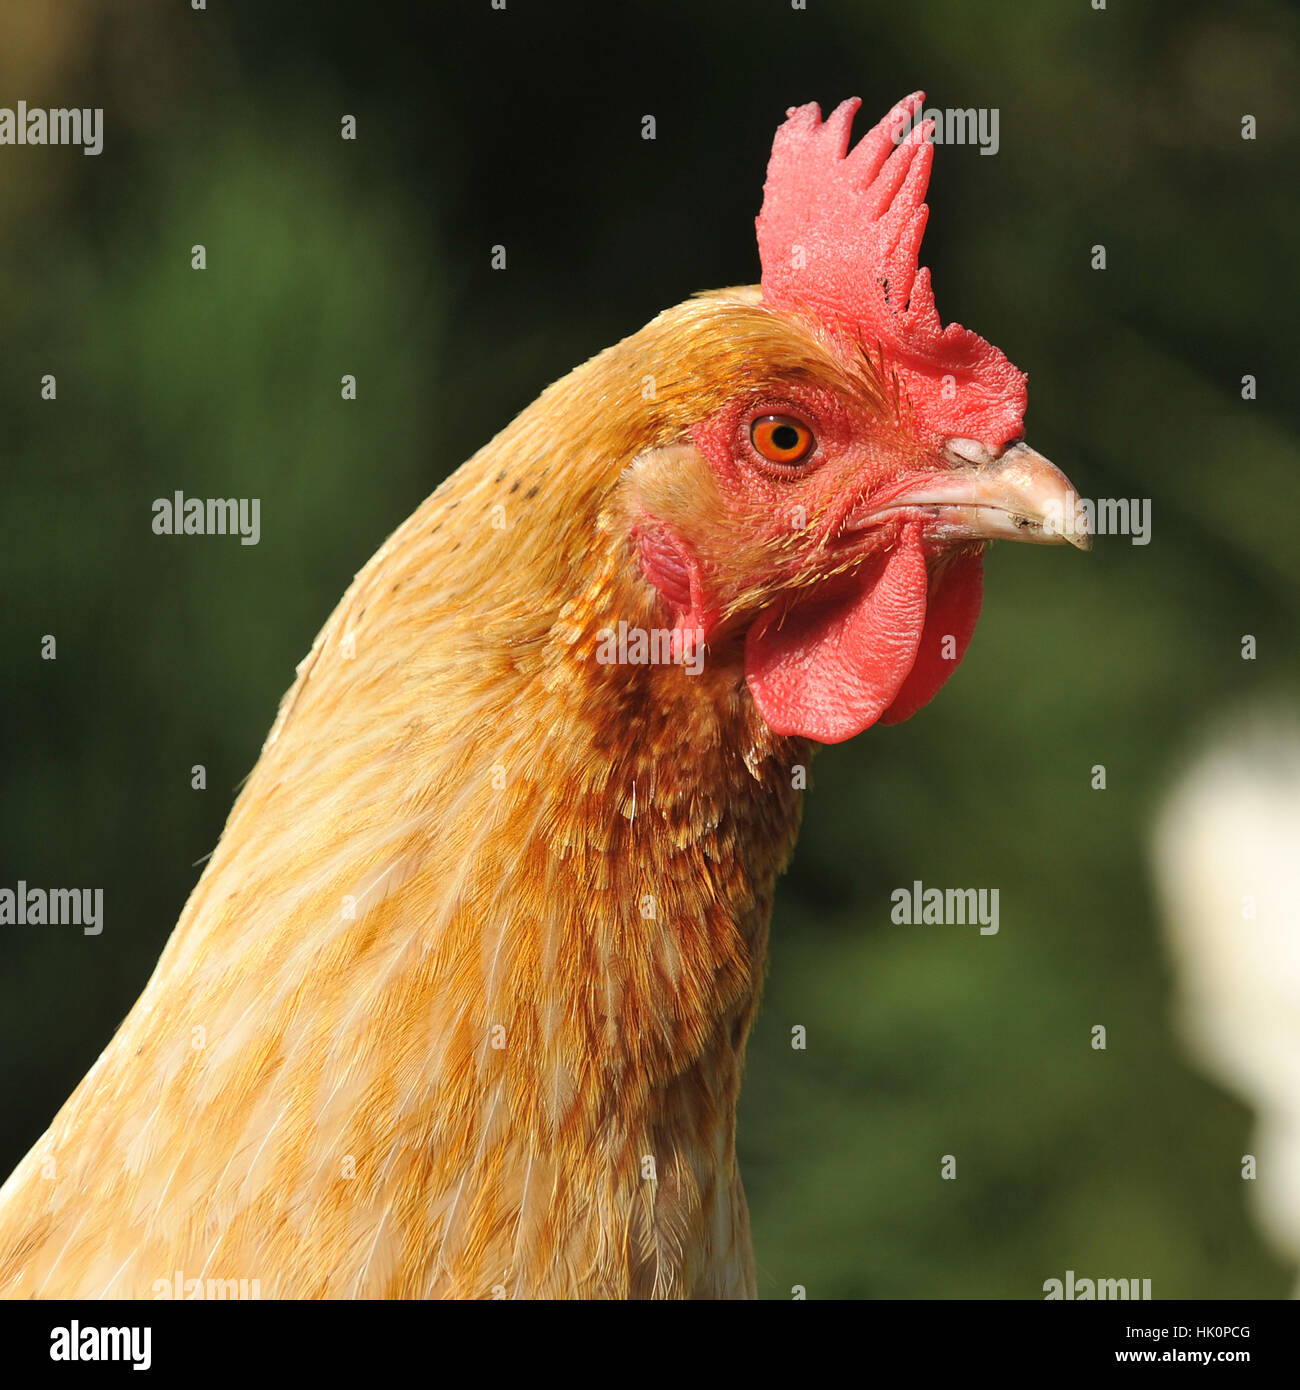 buff orpington chicken Stock Photo